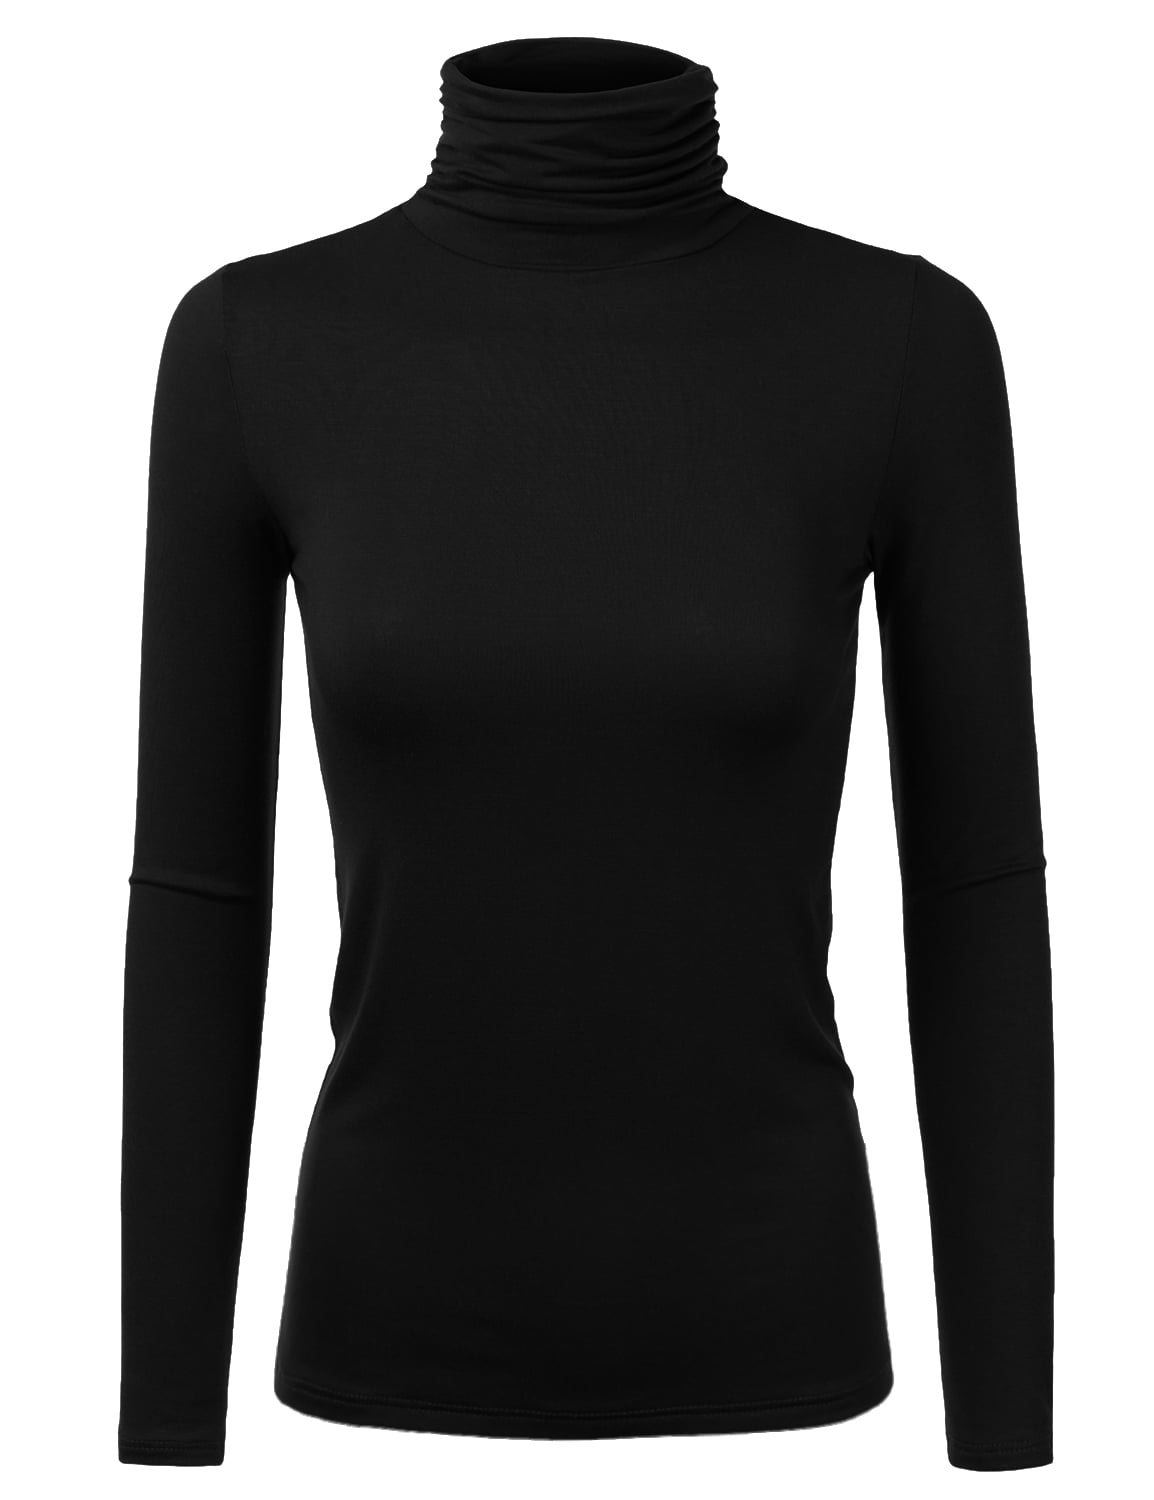 Doublju Women's Basic Slim Fit Sweater Long Sleeve Turtleneck T-Shirt ...